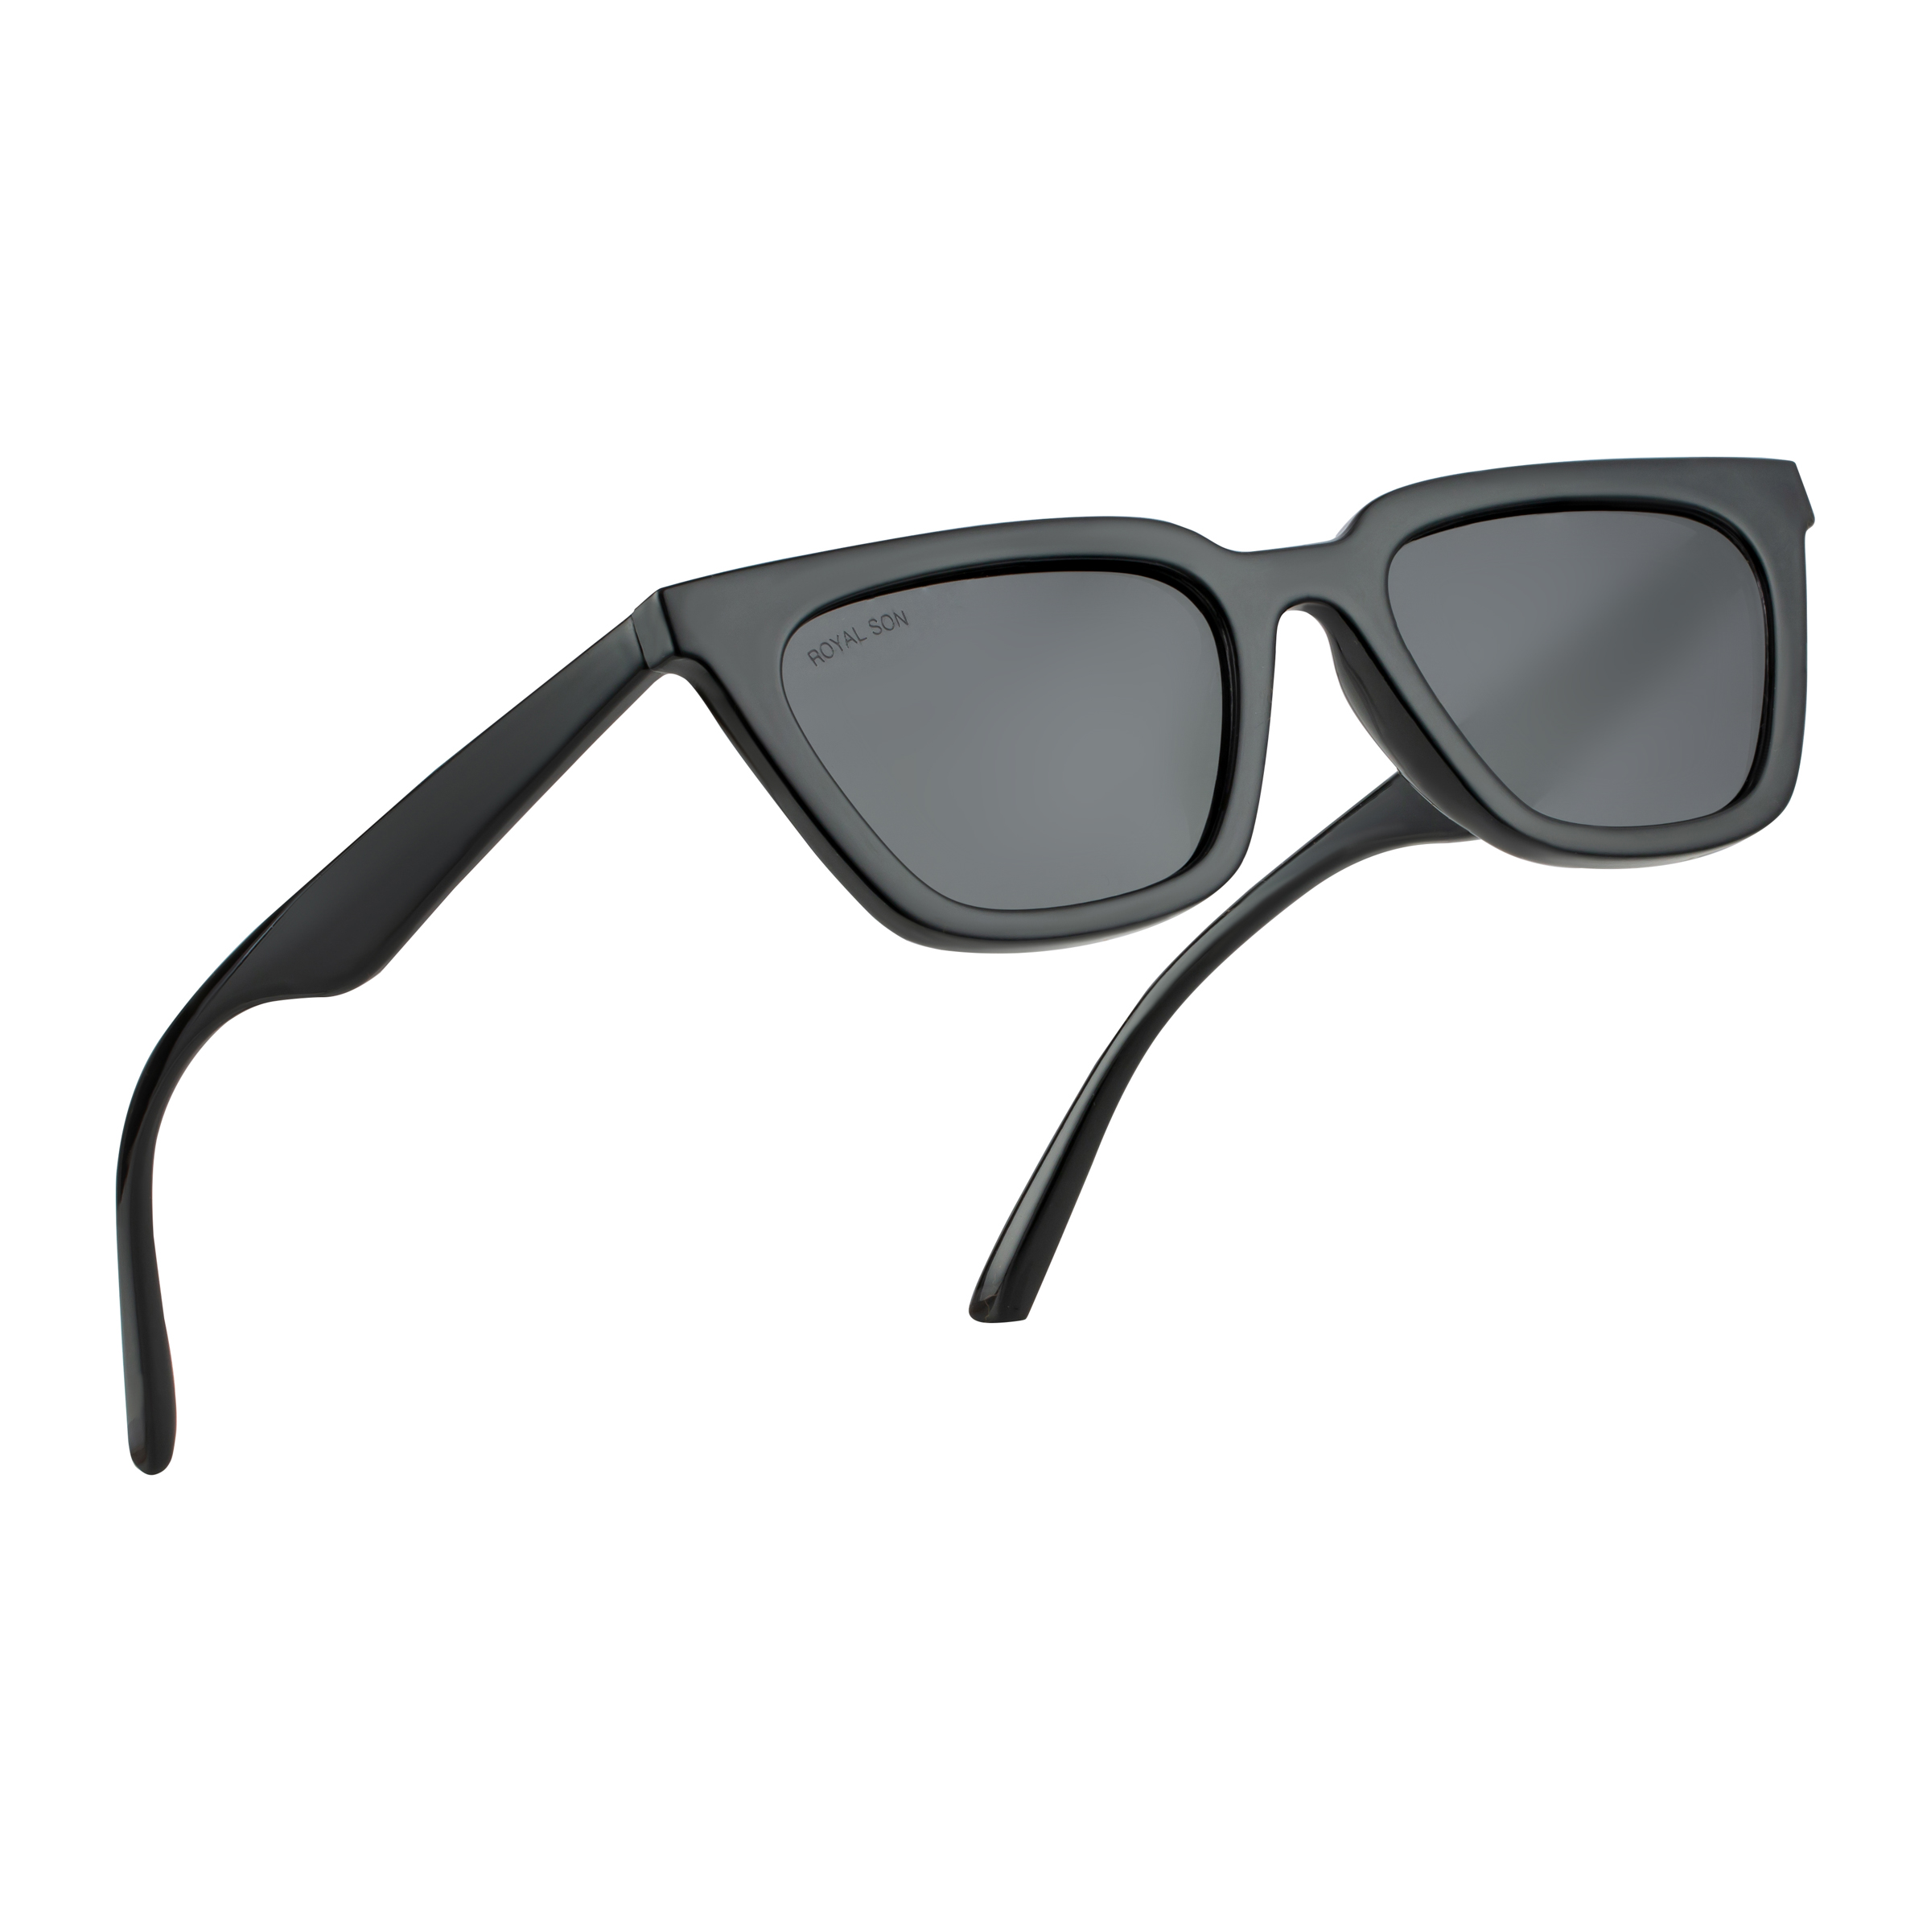 As Seen on TV HD Vision Ultra Sunglasses - Walmart.com